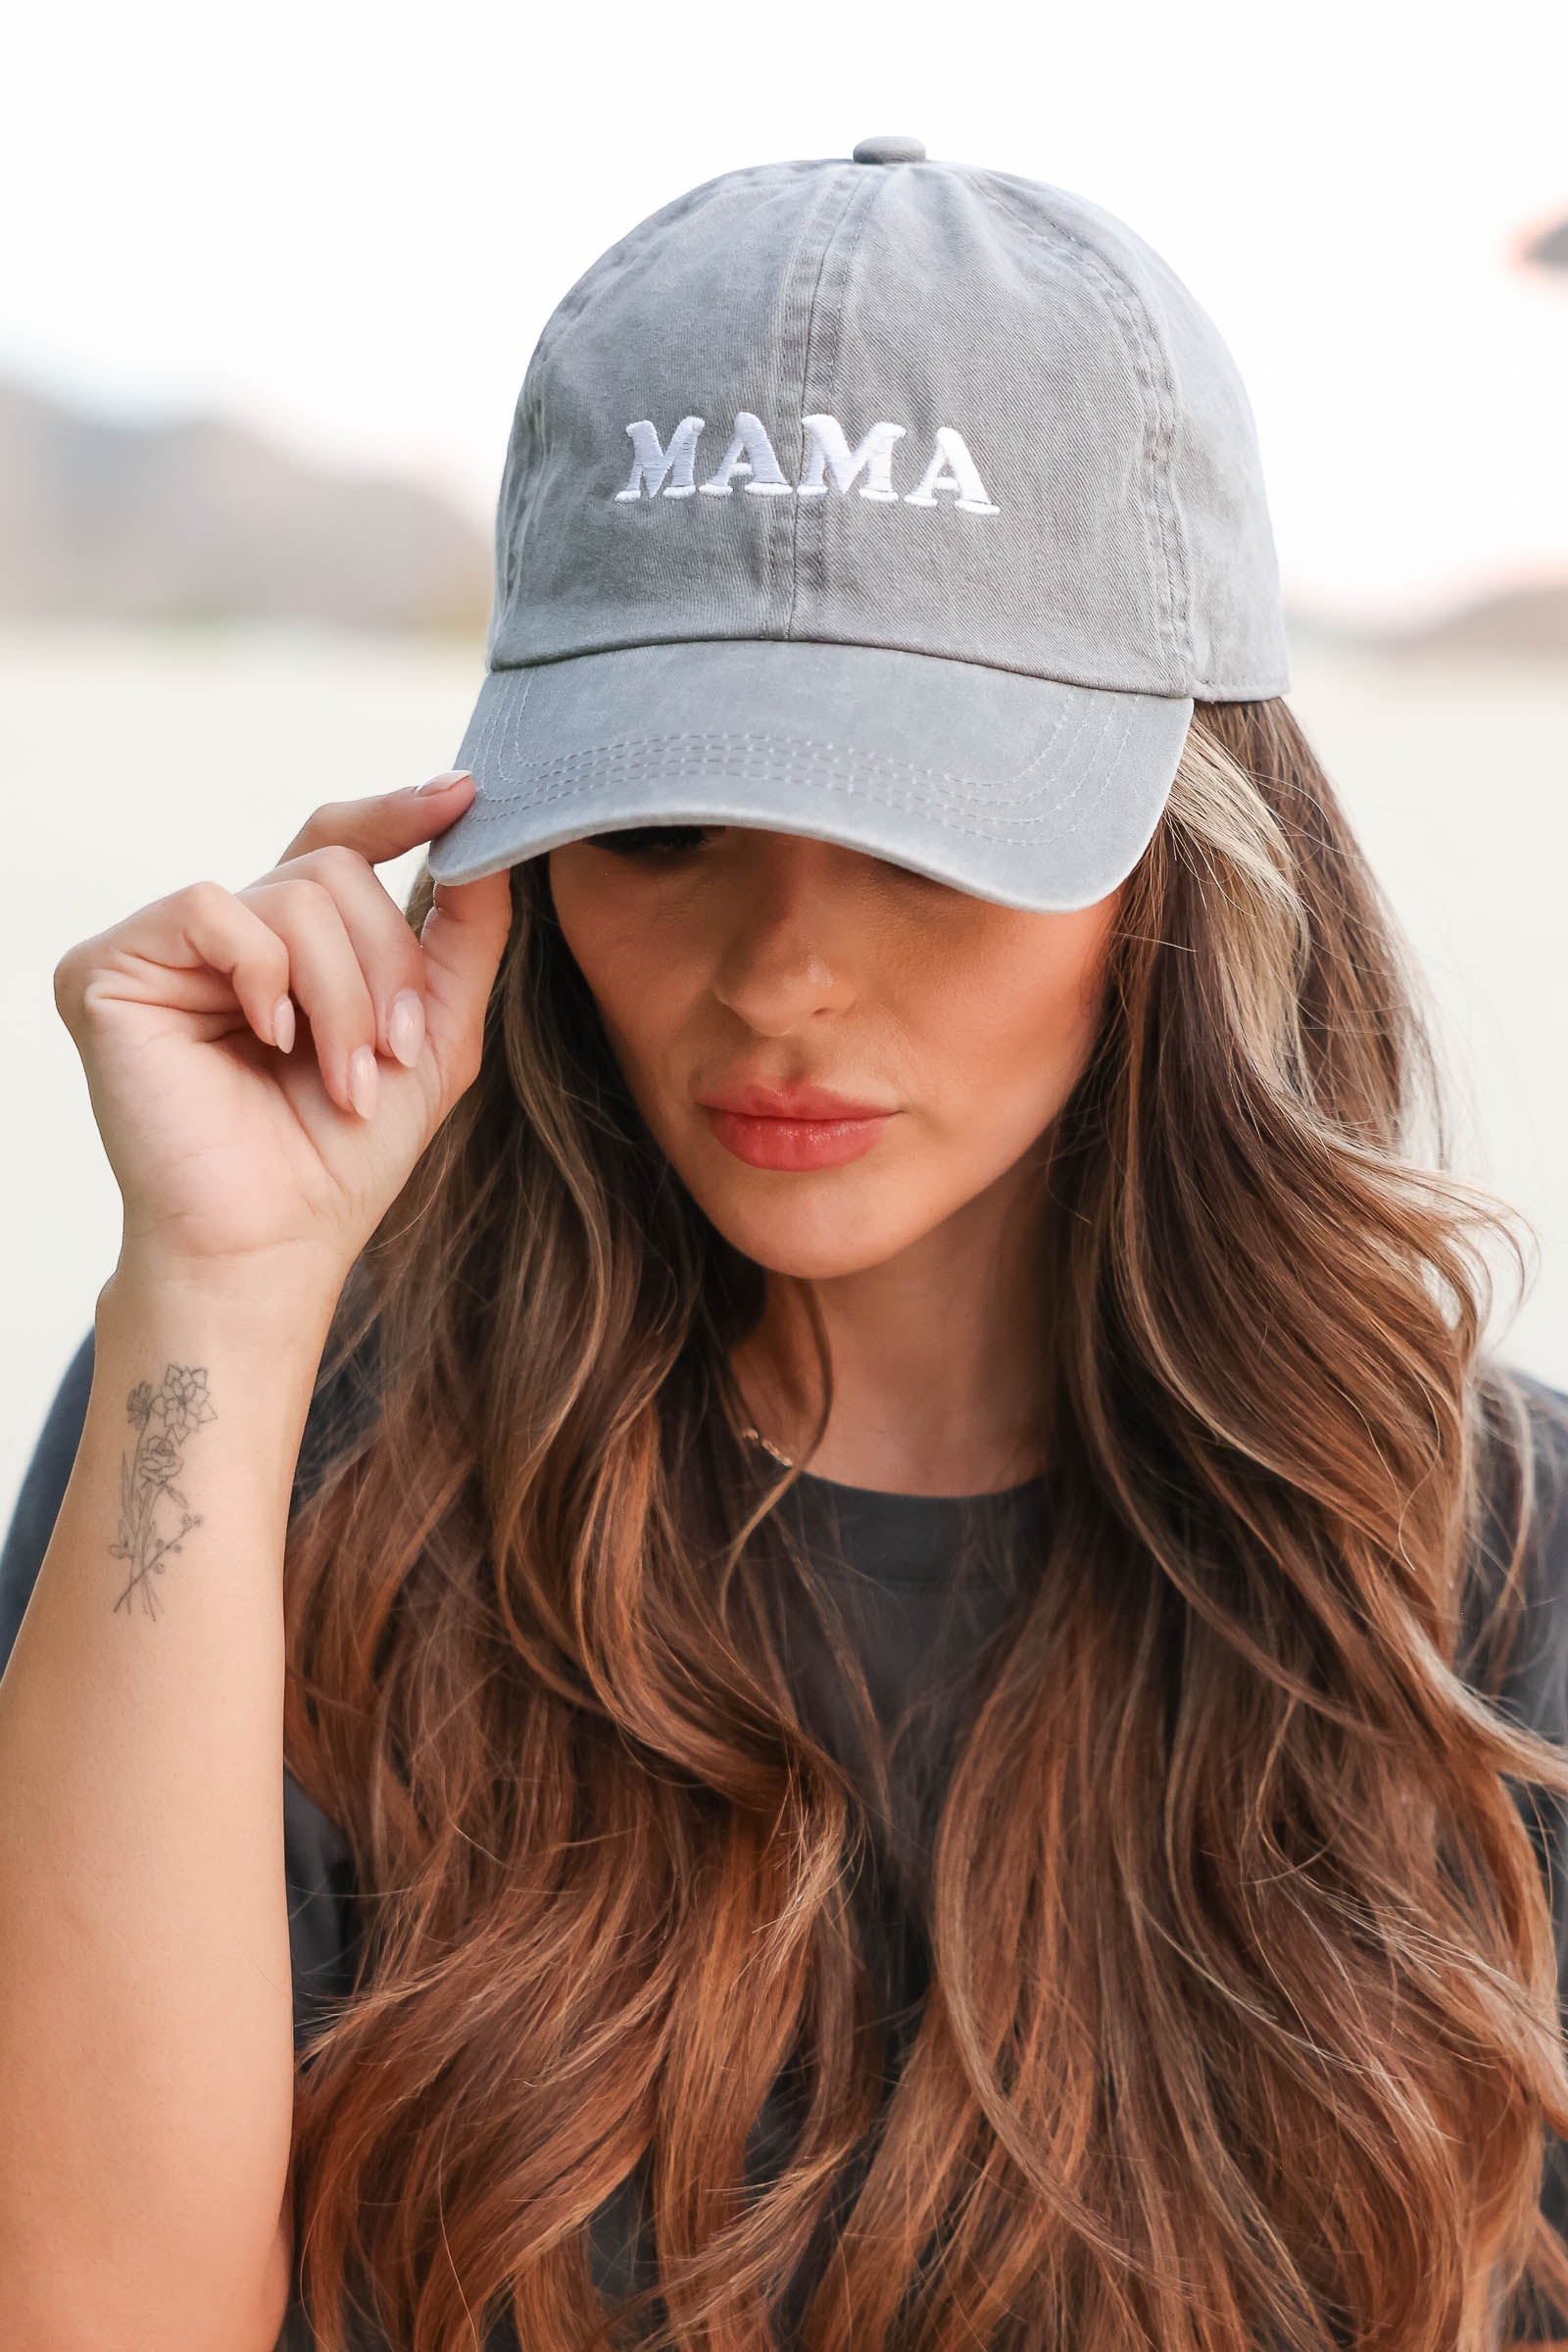 "Mama" Vintage Wash Hat - Grey, Closet Candy, 1